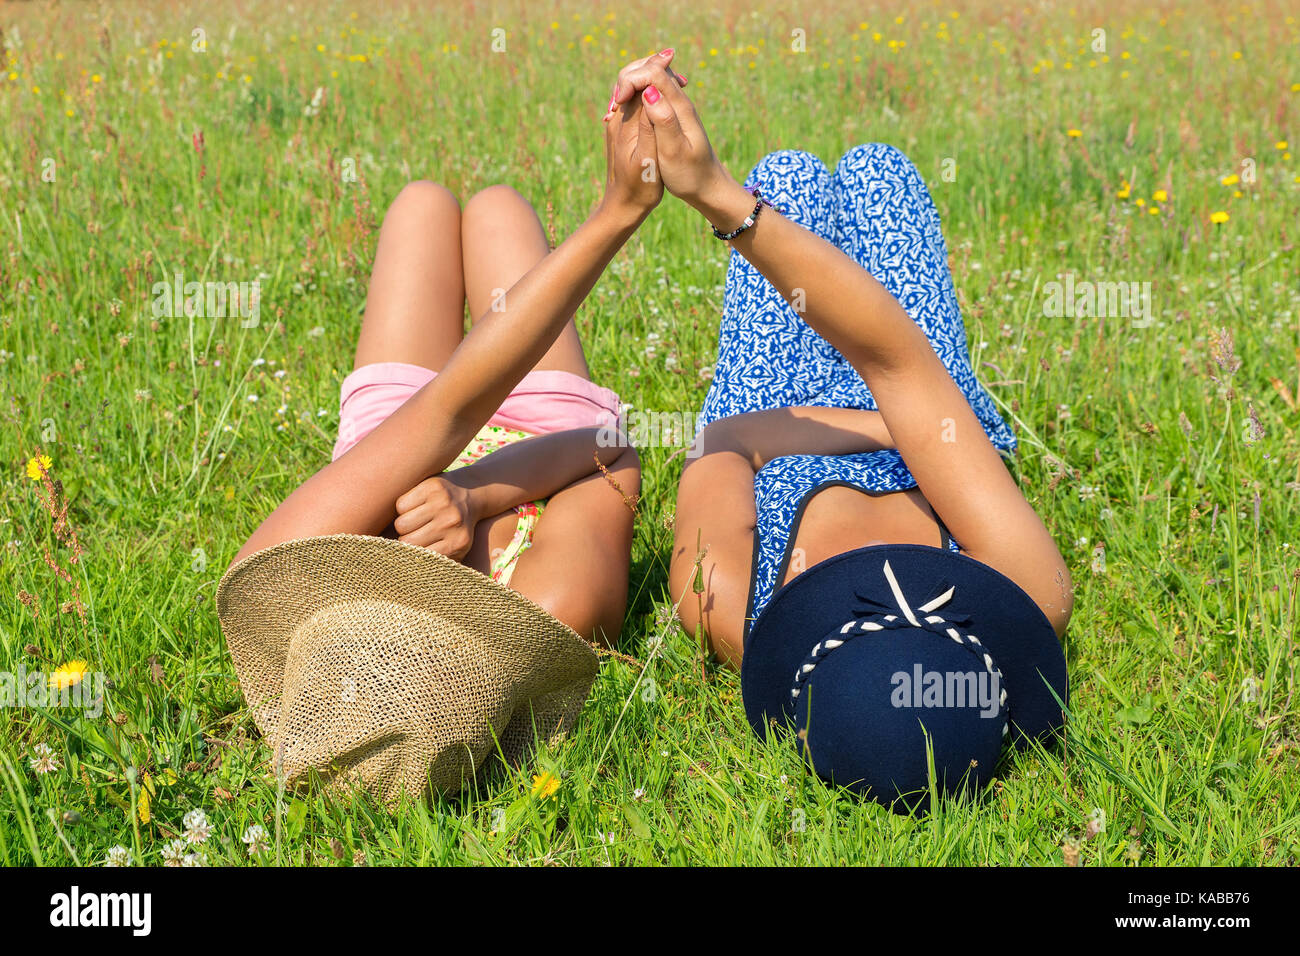 Deux jeunes femmes lying together in Green grass Banque D'Images